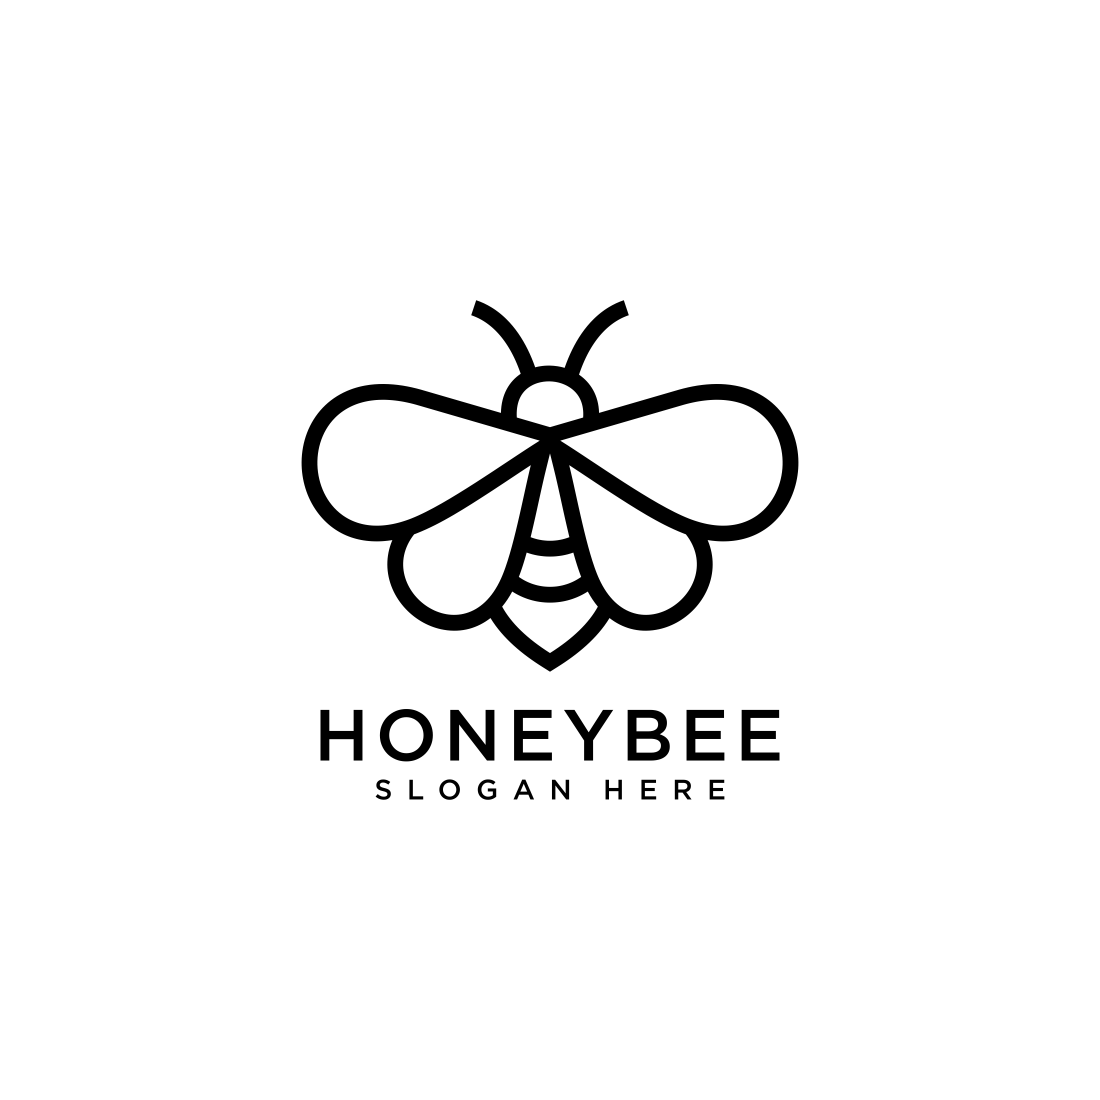 honey bee animal logo preview image.